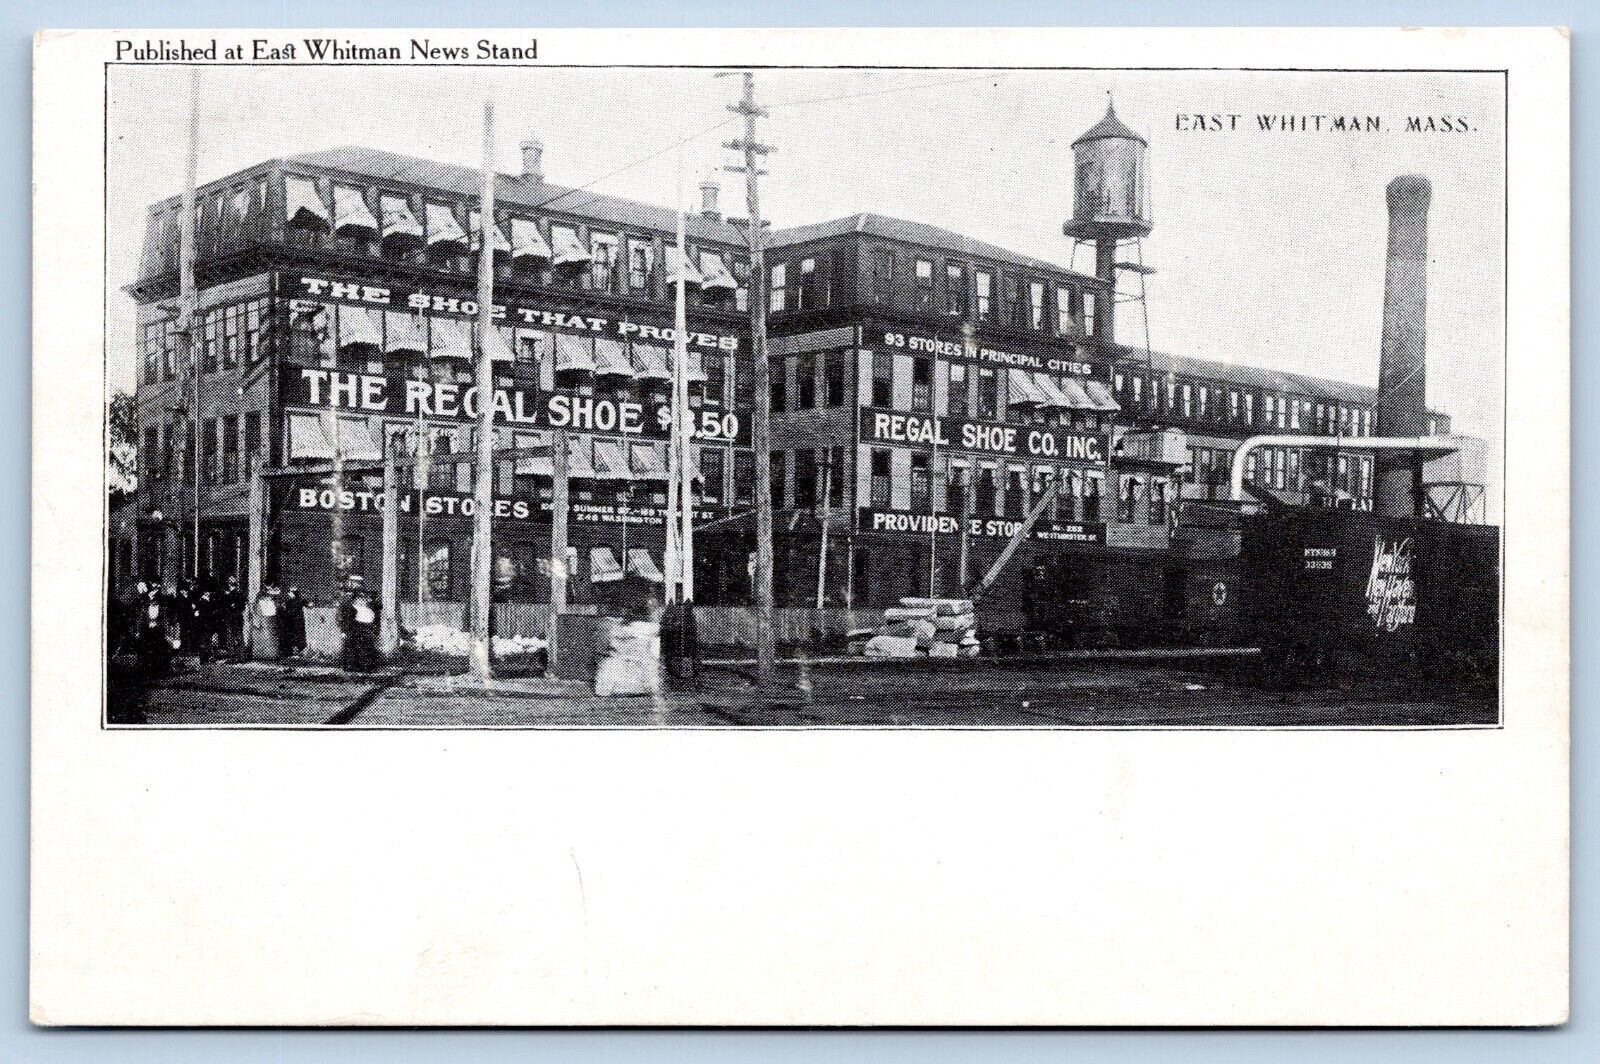 c1906 postcard EAST WHITMAN MASS NEWS STAND PC BOSTON. STORES REGAL SHOE FACTORY